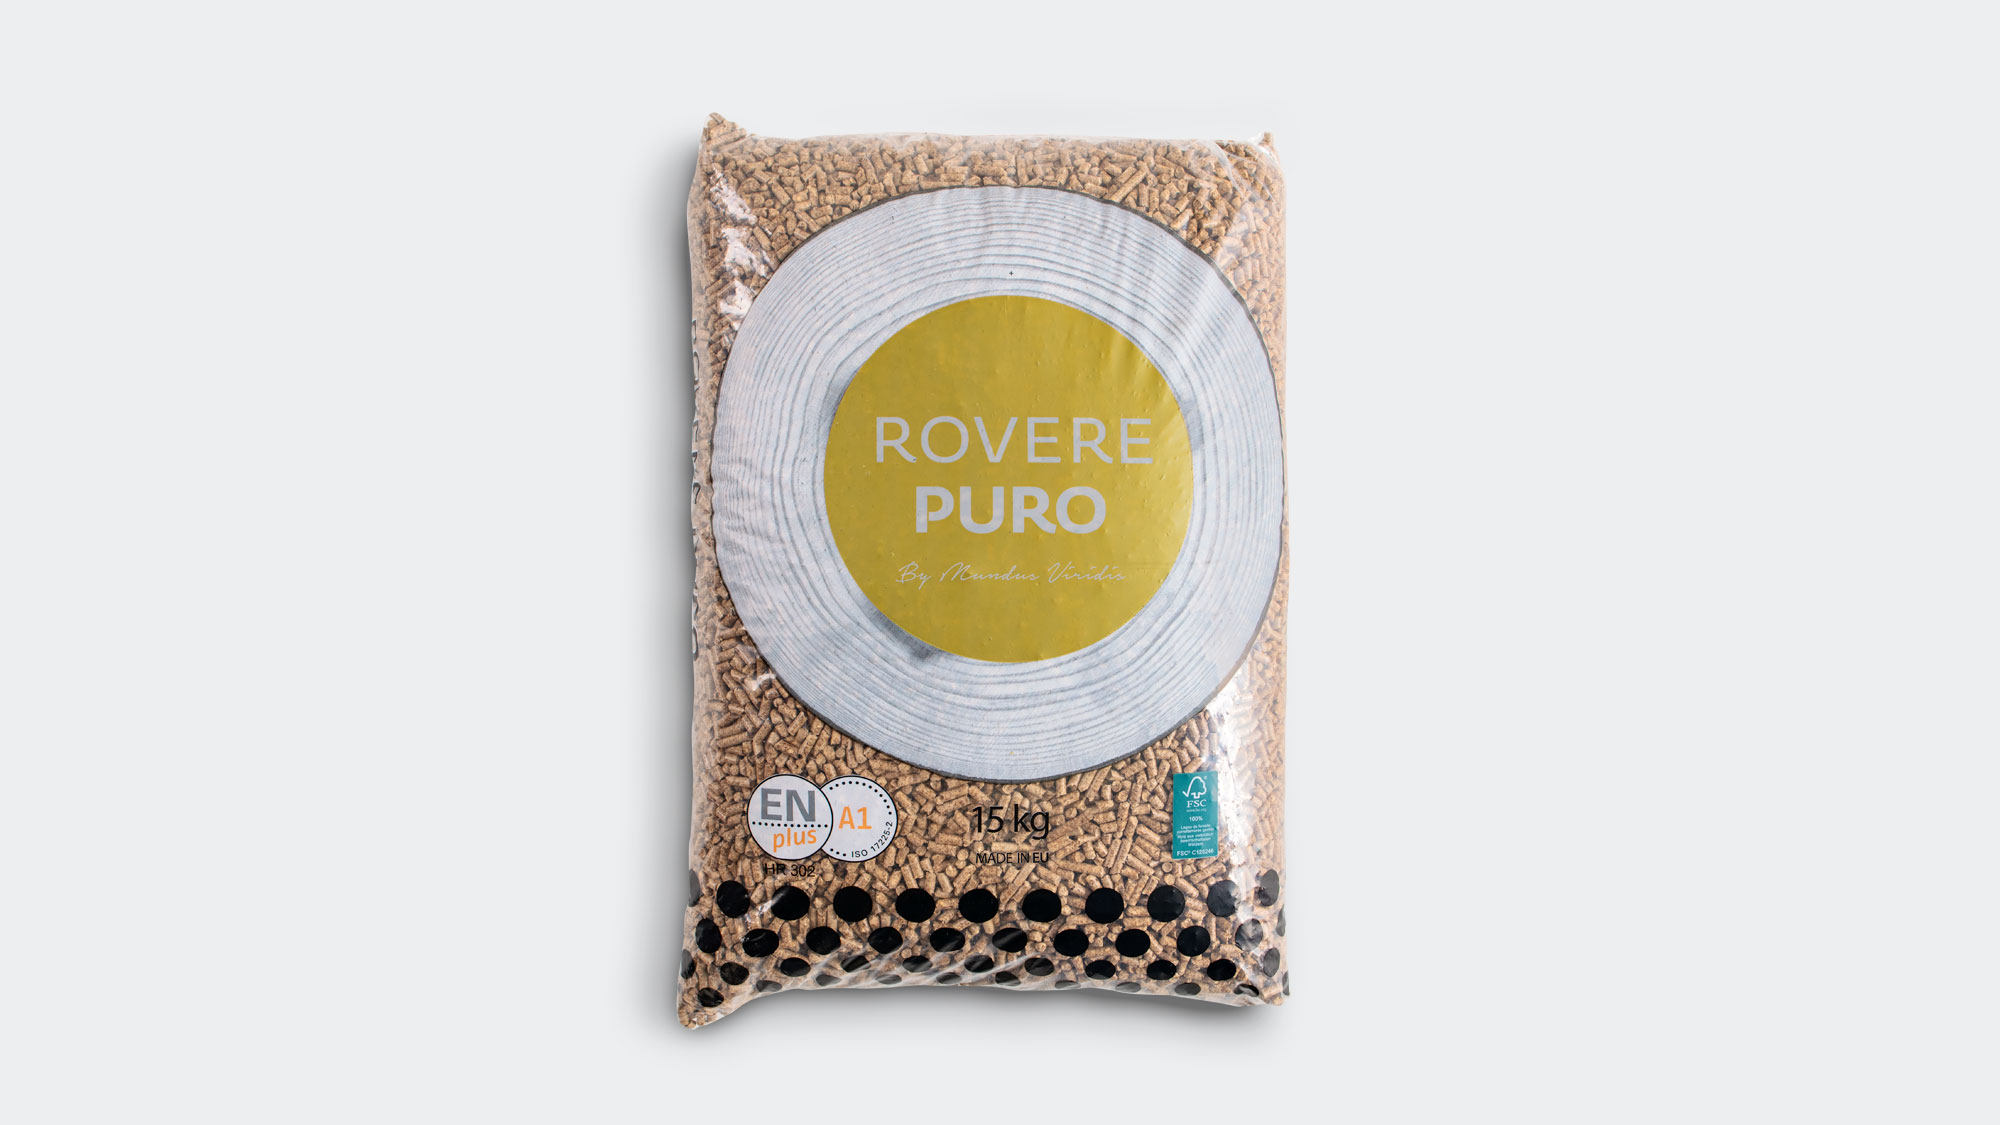 Oak pellets - Rovere Puro - Image 1